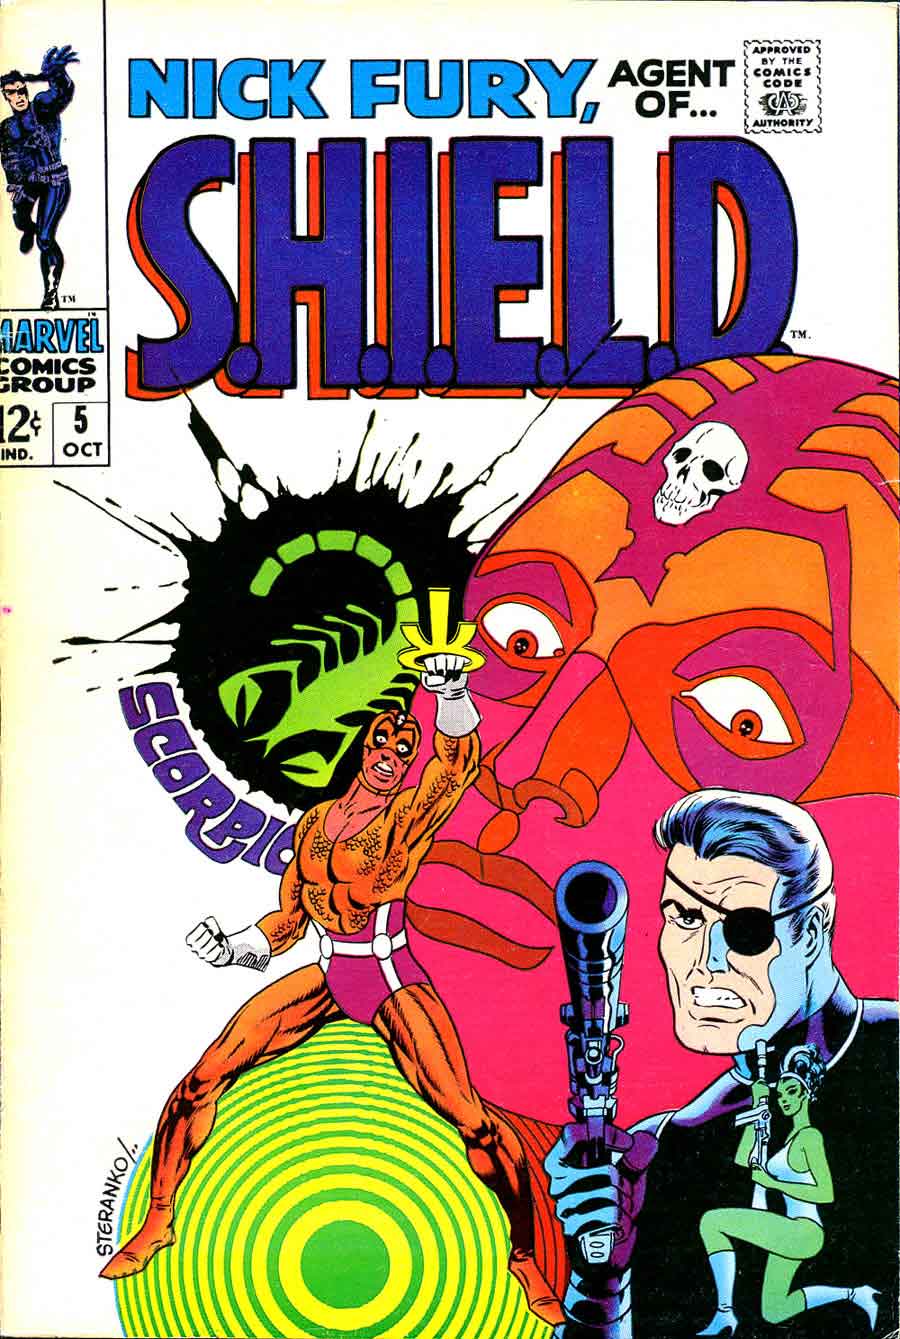 Nick Fury Agent of Shield v1 #5 1960s marvel comic book cover art by Jim Steranko